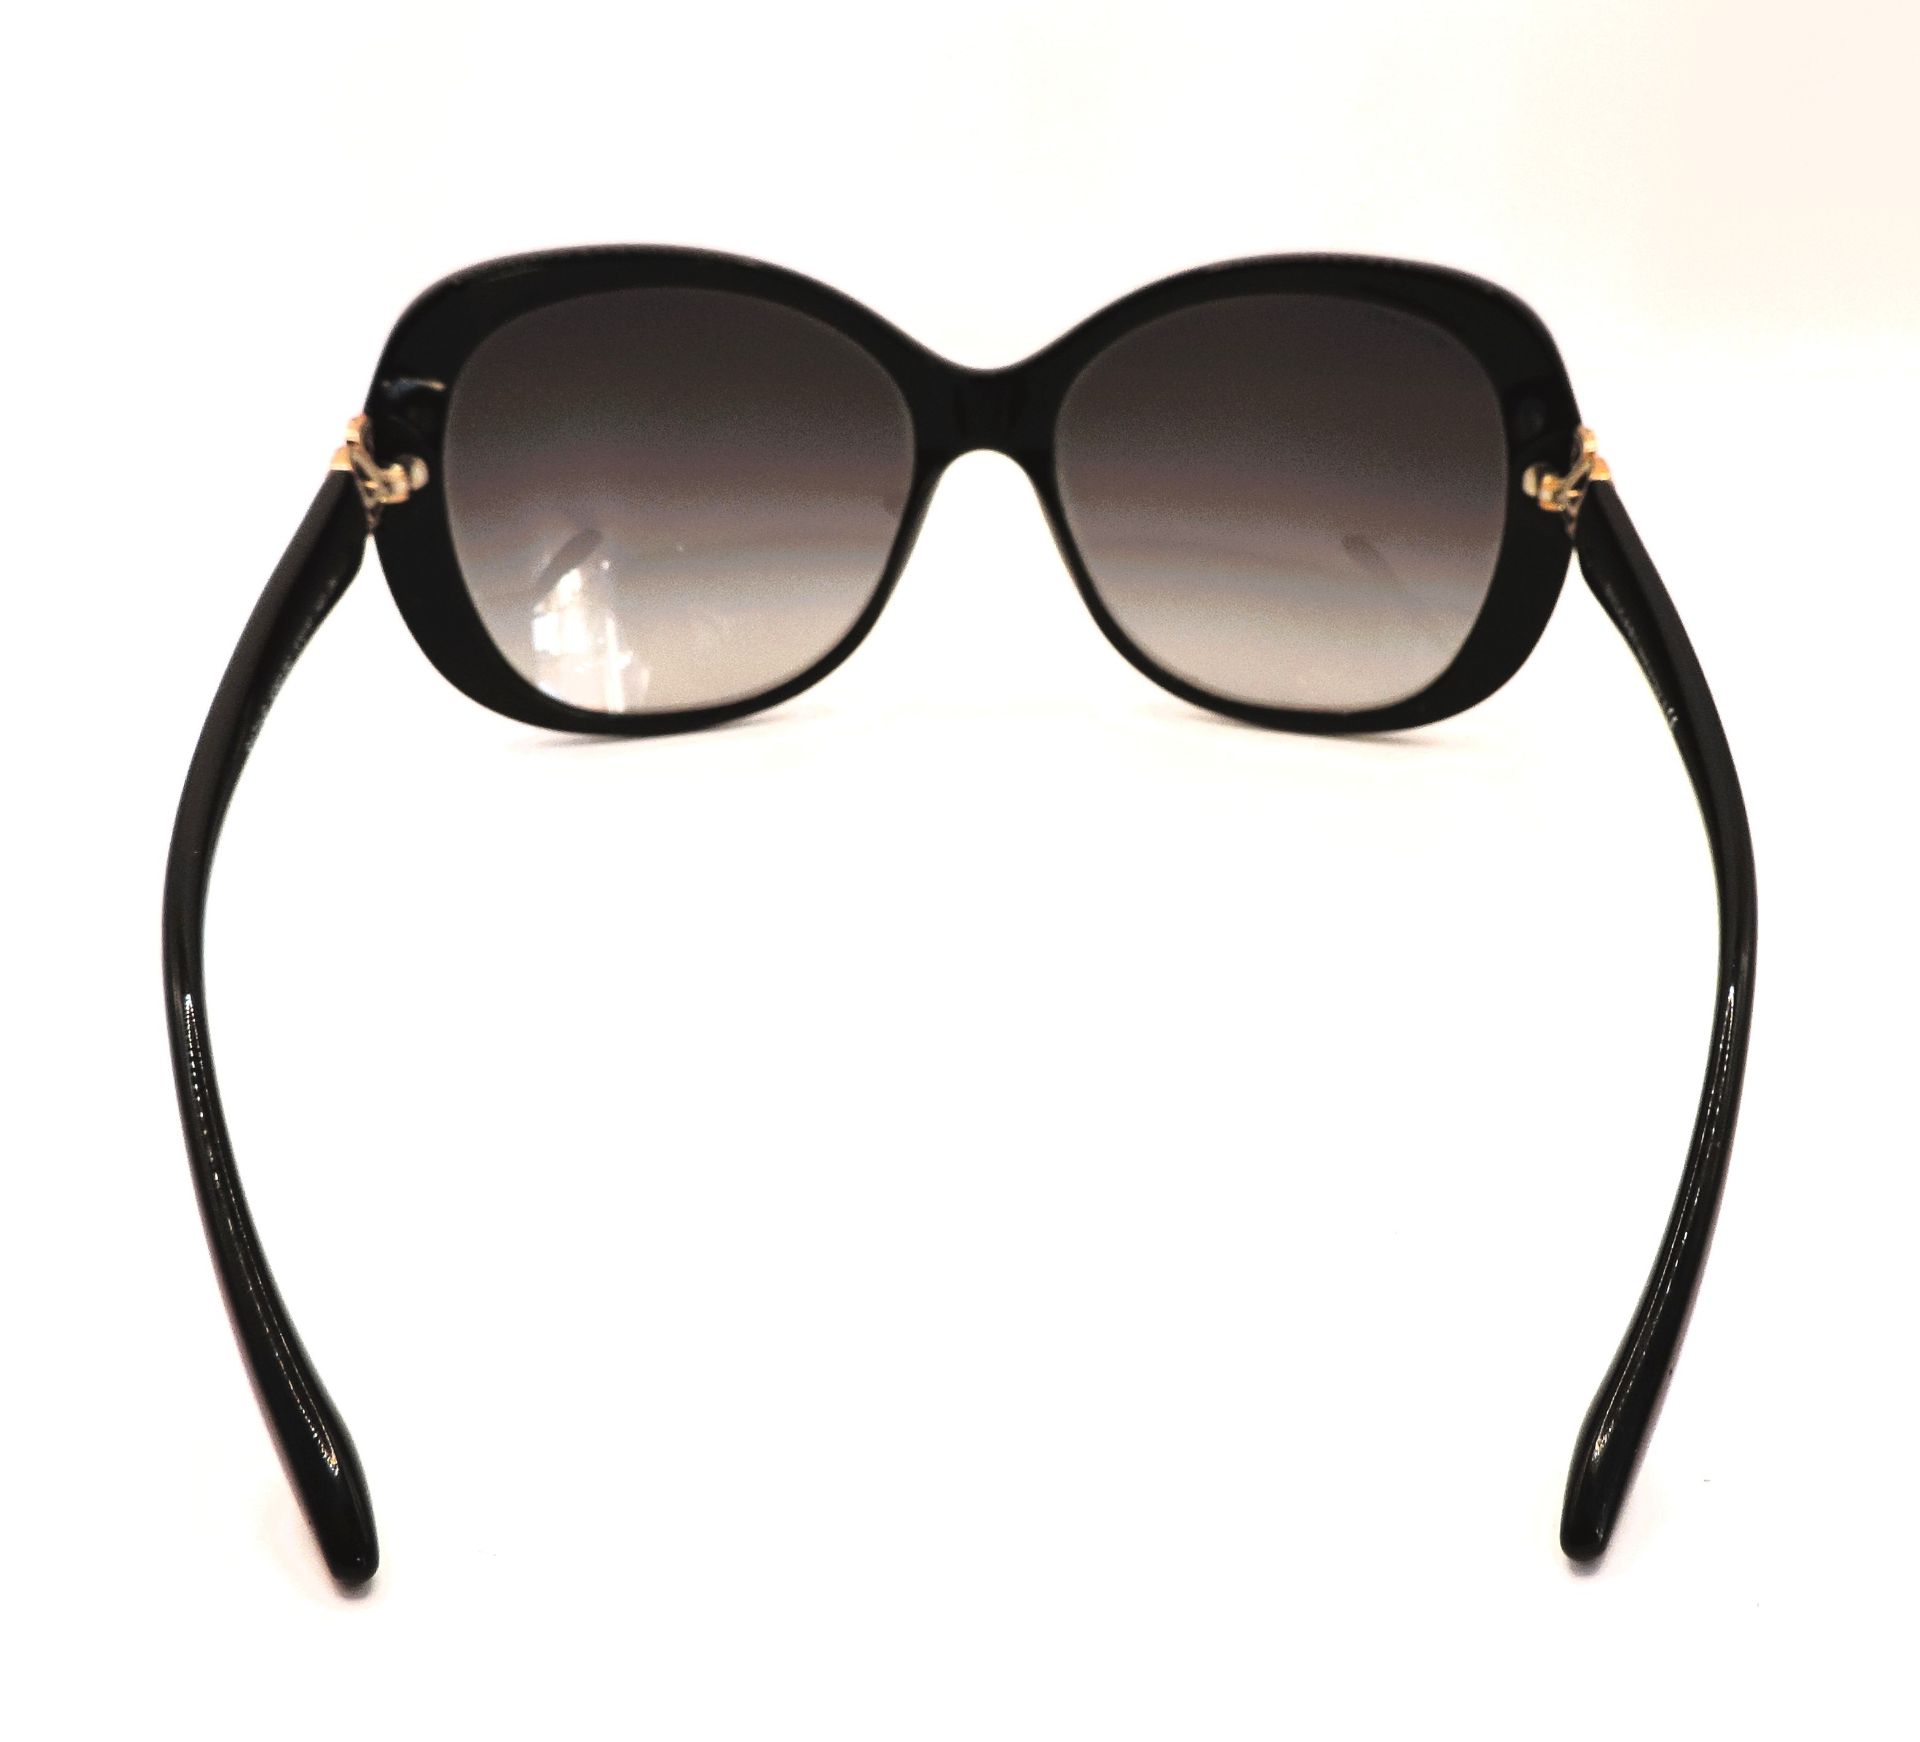 BVLGARI Black Sunglasses 8171-C Jewelled Hinged Detail New With Box & Certificate - Image 11 of 17